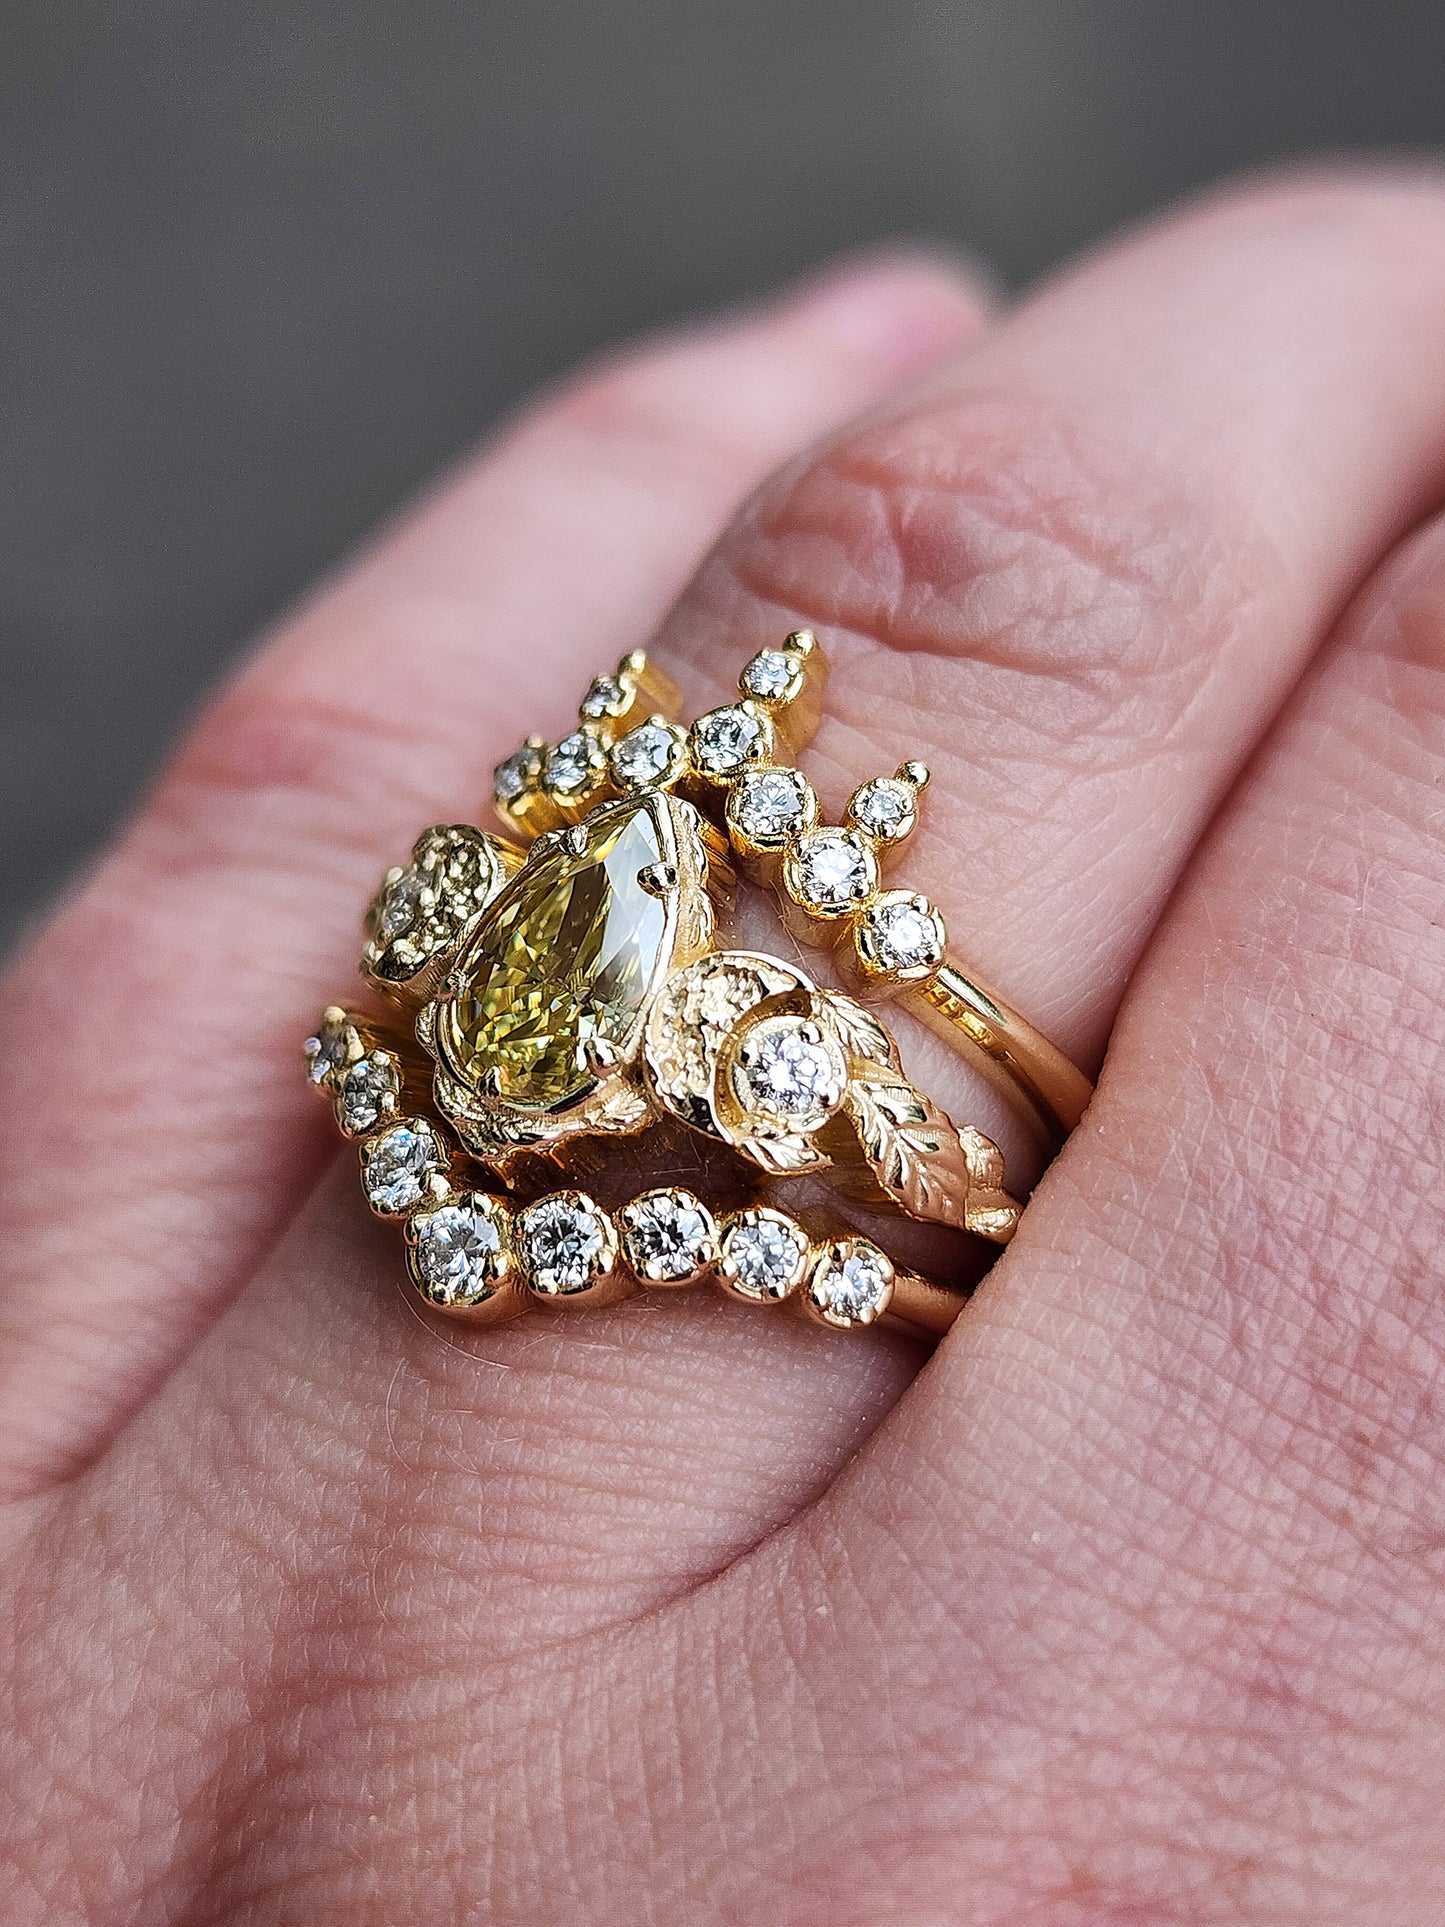 Crown shape ring with white diamond | Silveradda